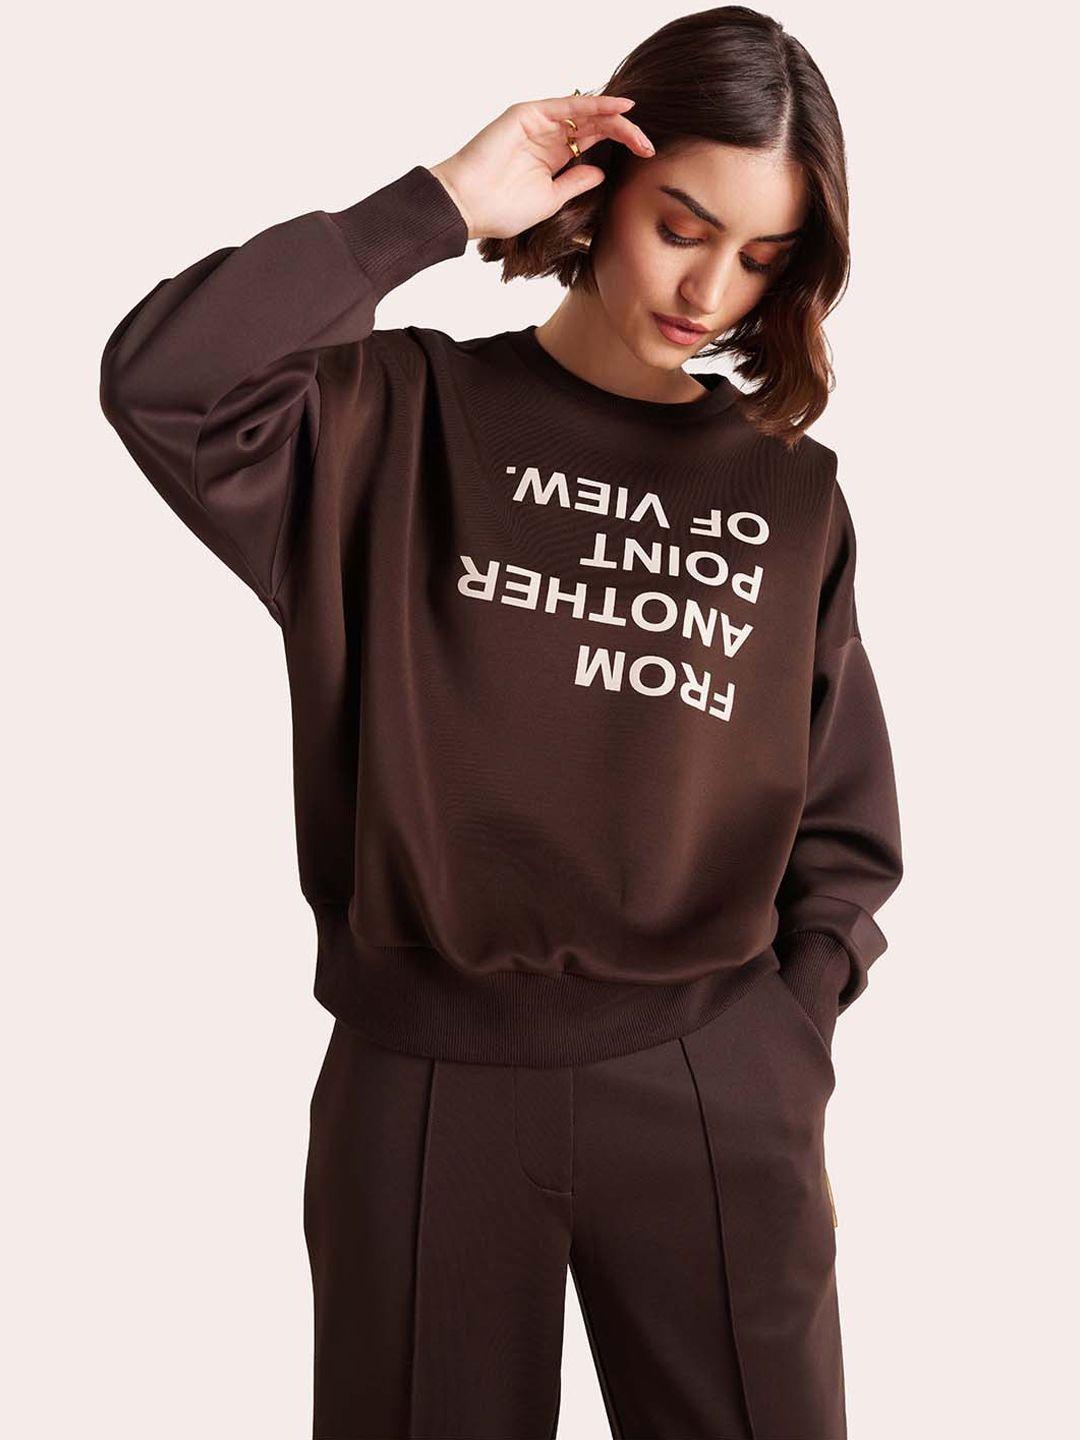 muvazo typographic printed sweatshirt & trousers co-ords